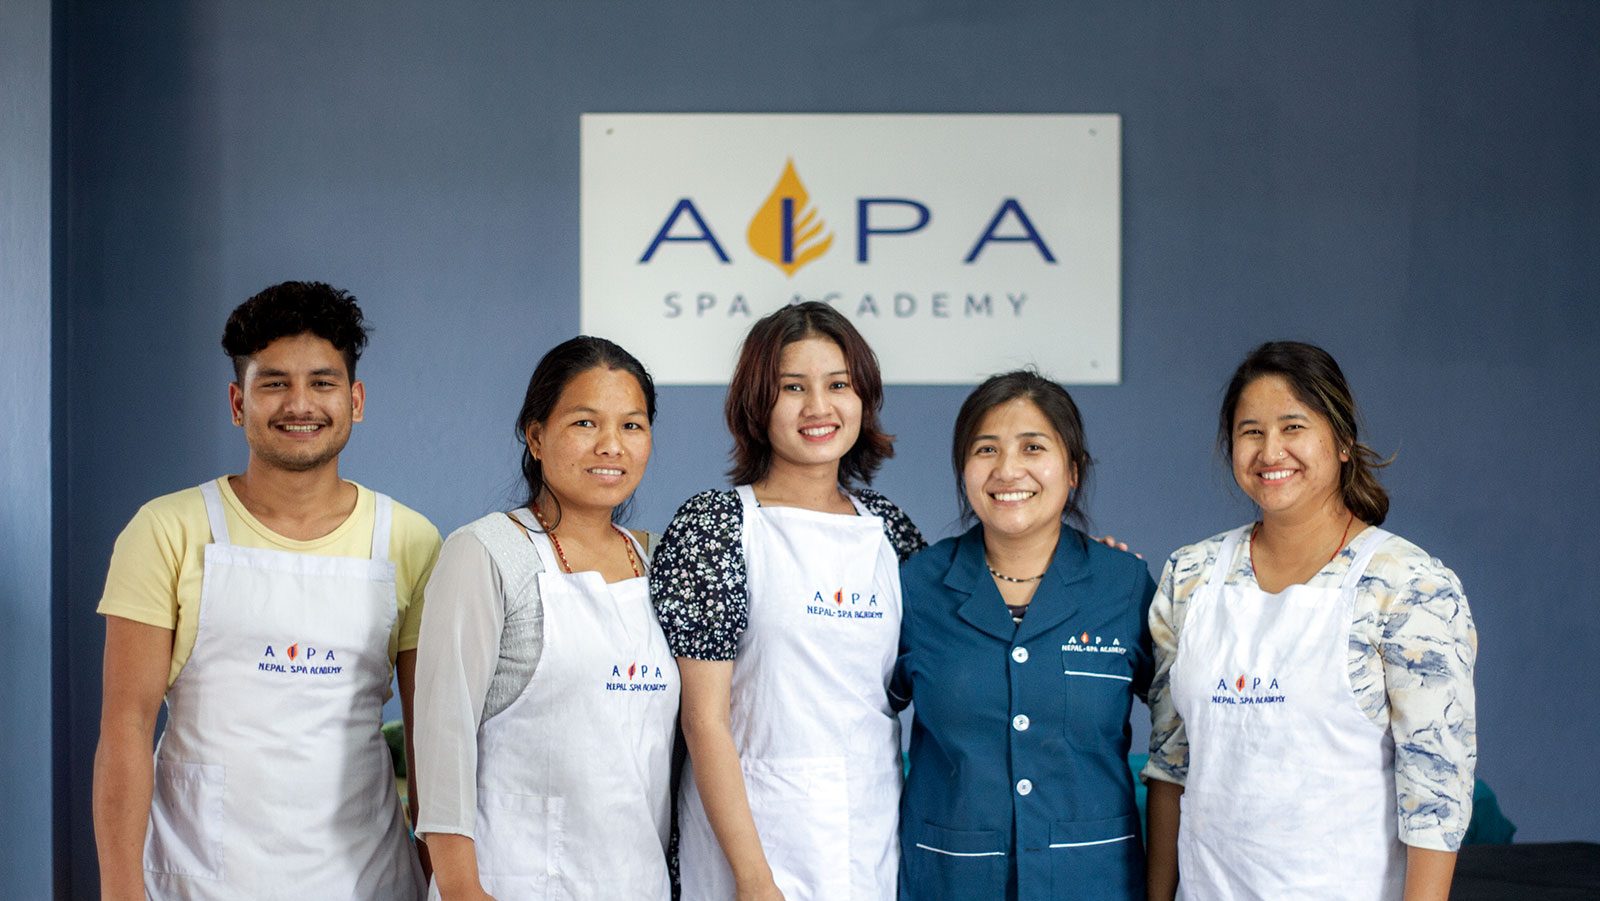 Aesthetics International Professional Academy AIPA - Nepal Spa Academy